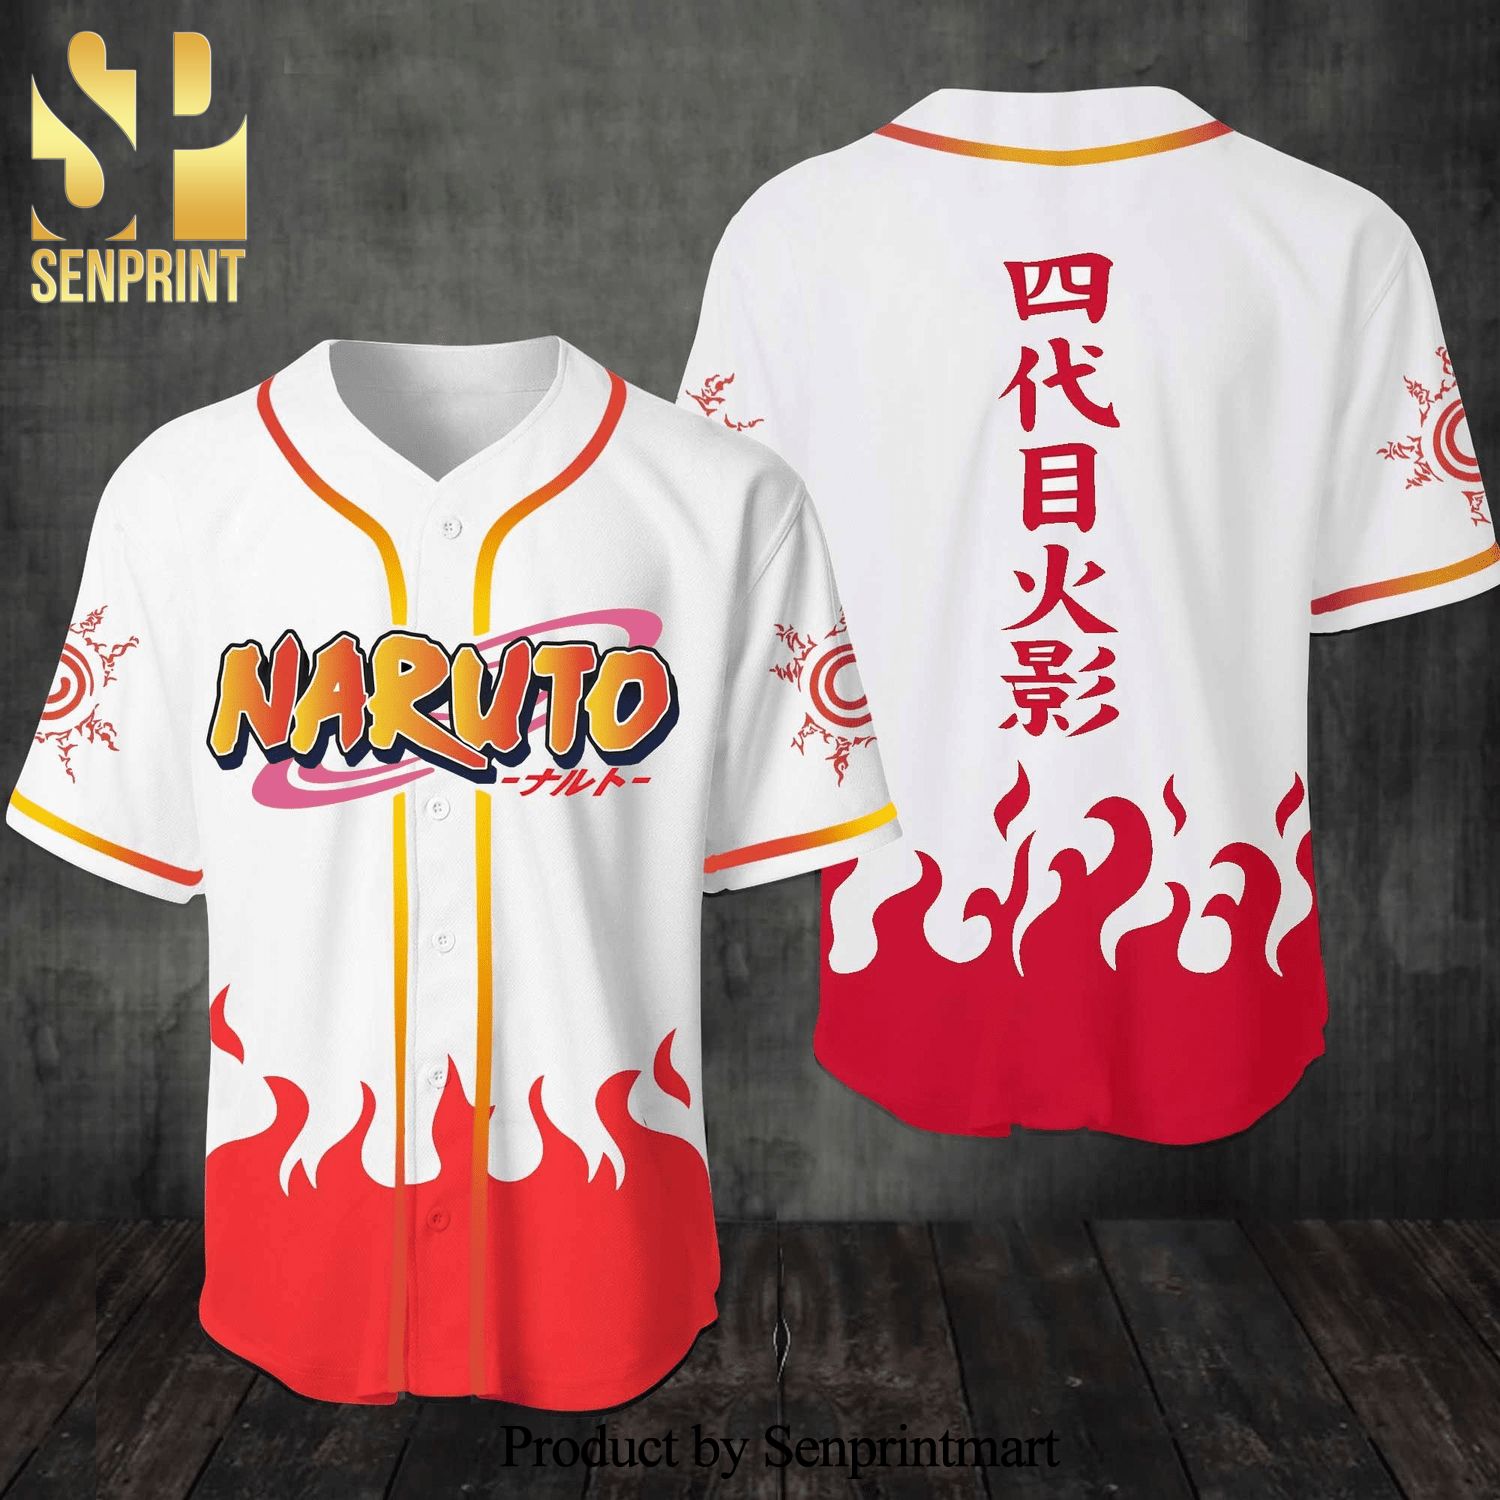 Naruto Konoha Will Of Fire Full Printing Baseball Jersey – White